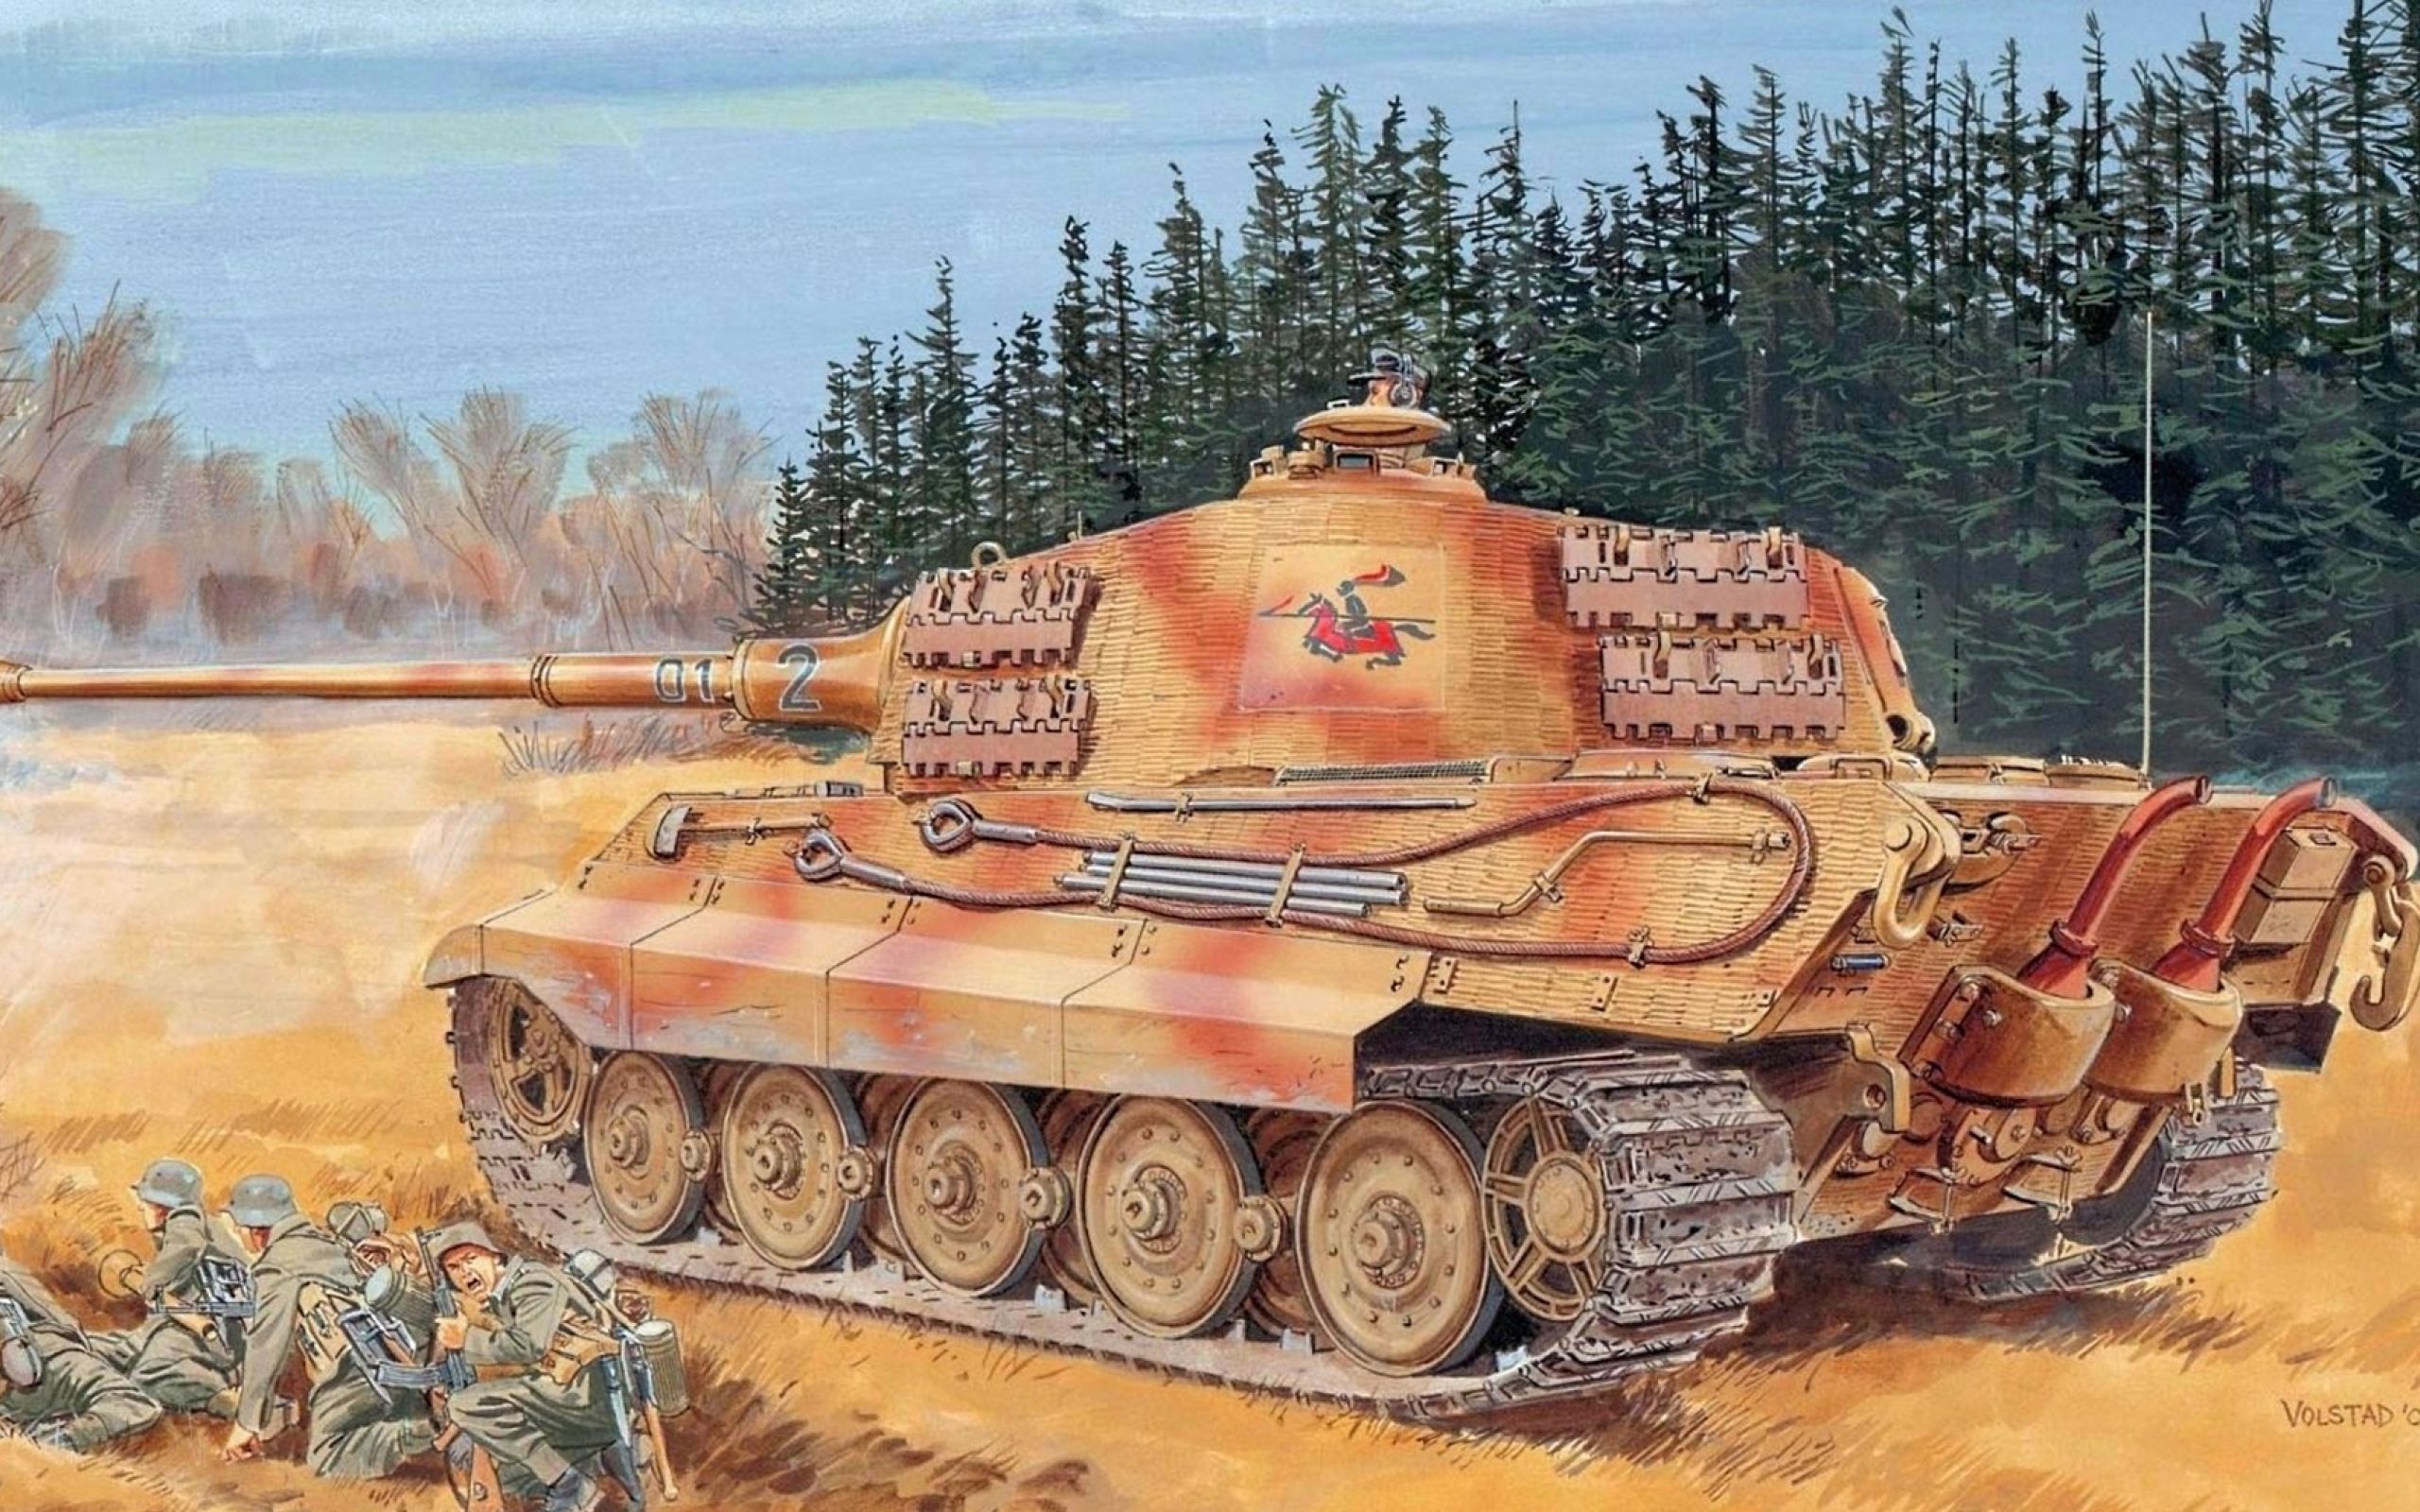 Pz kpfw b. Танк тигр 2. Королевский тигр танк. Немецкий танк Королевский тигр. Танк тигр и Королевский тигр.